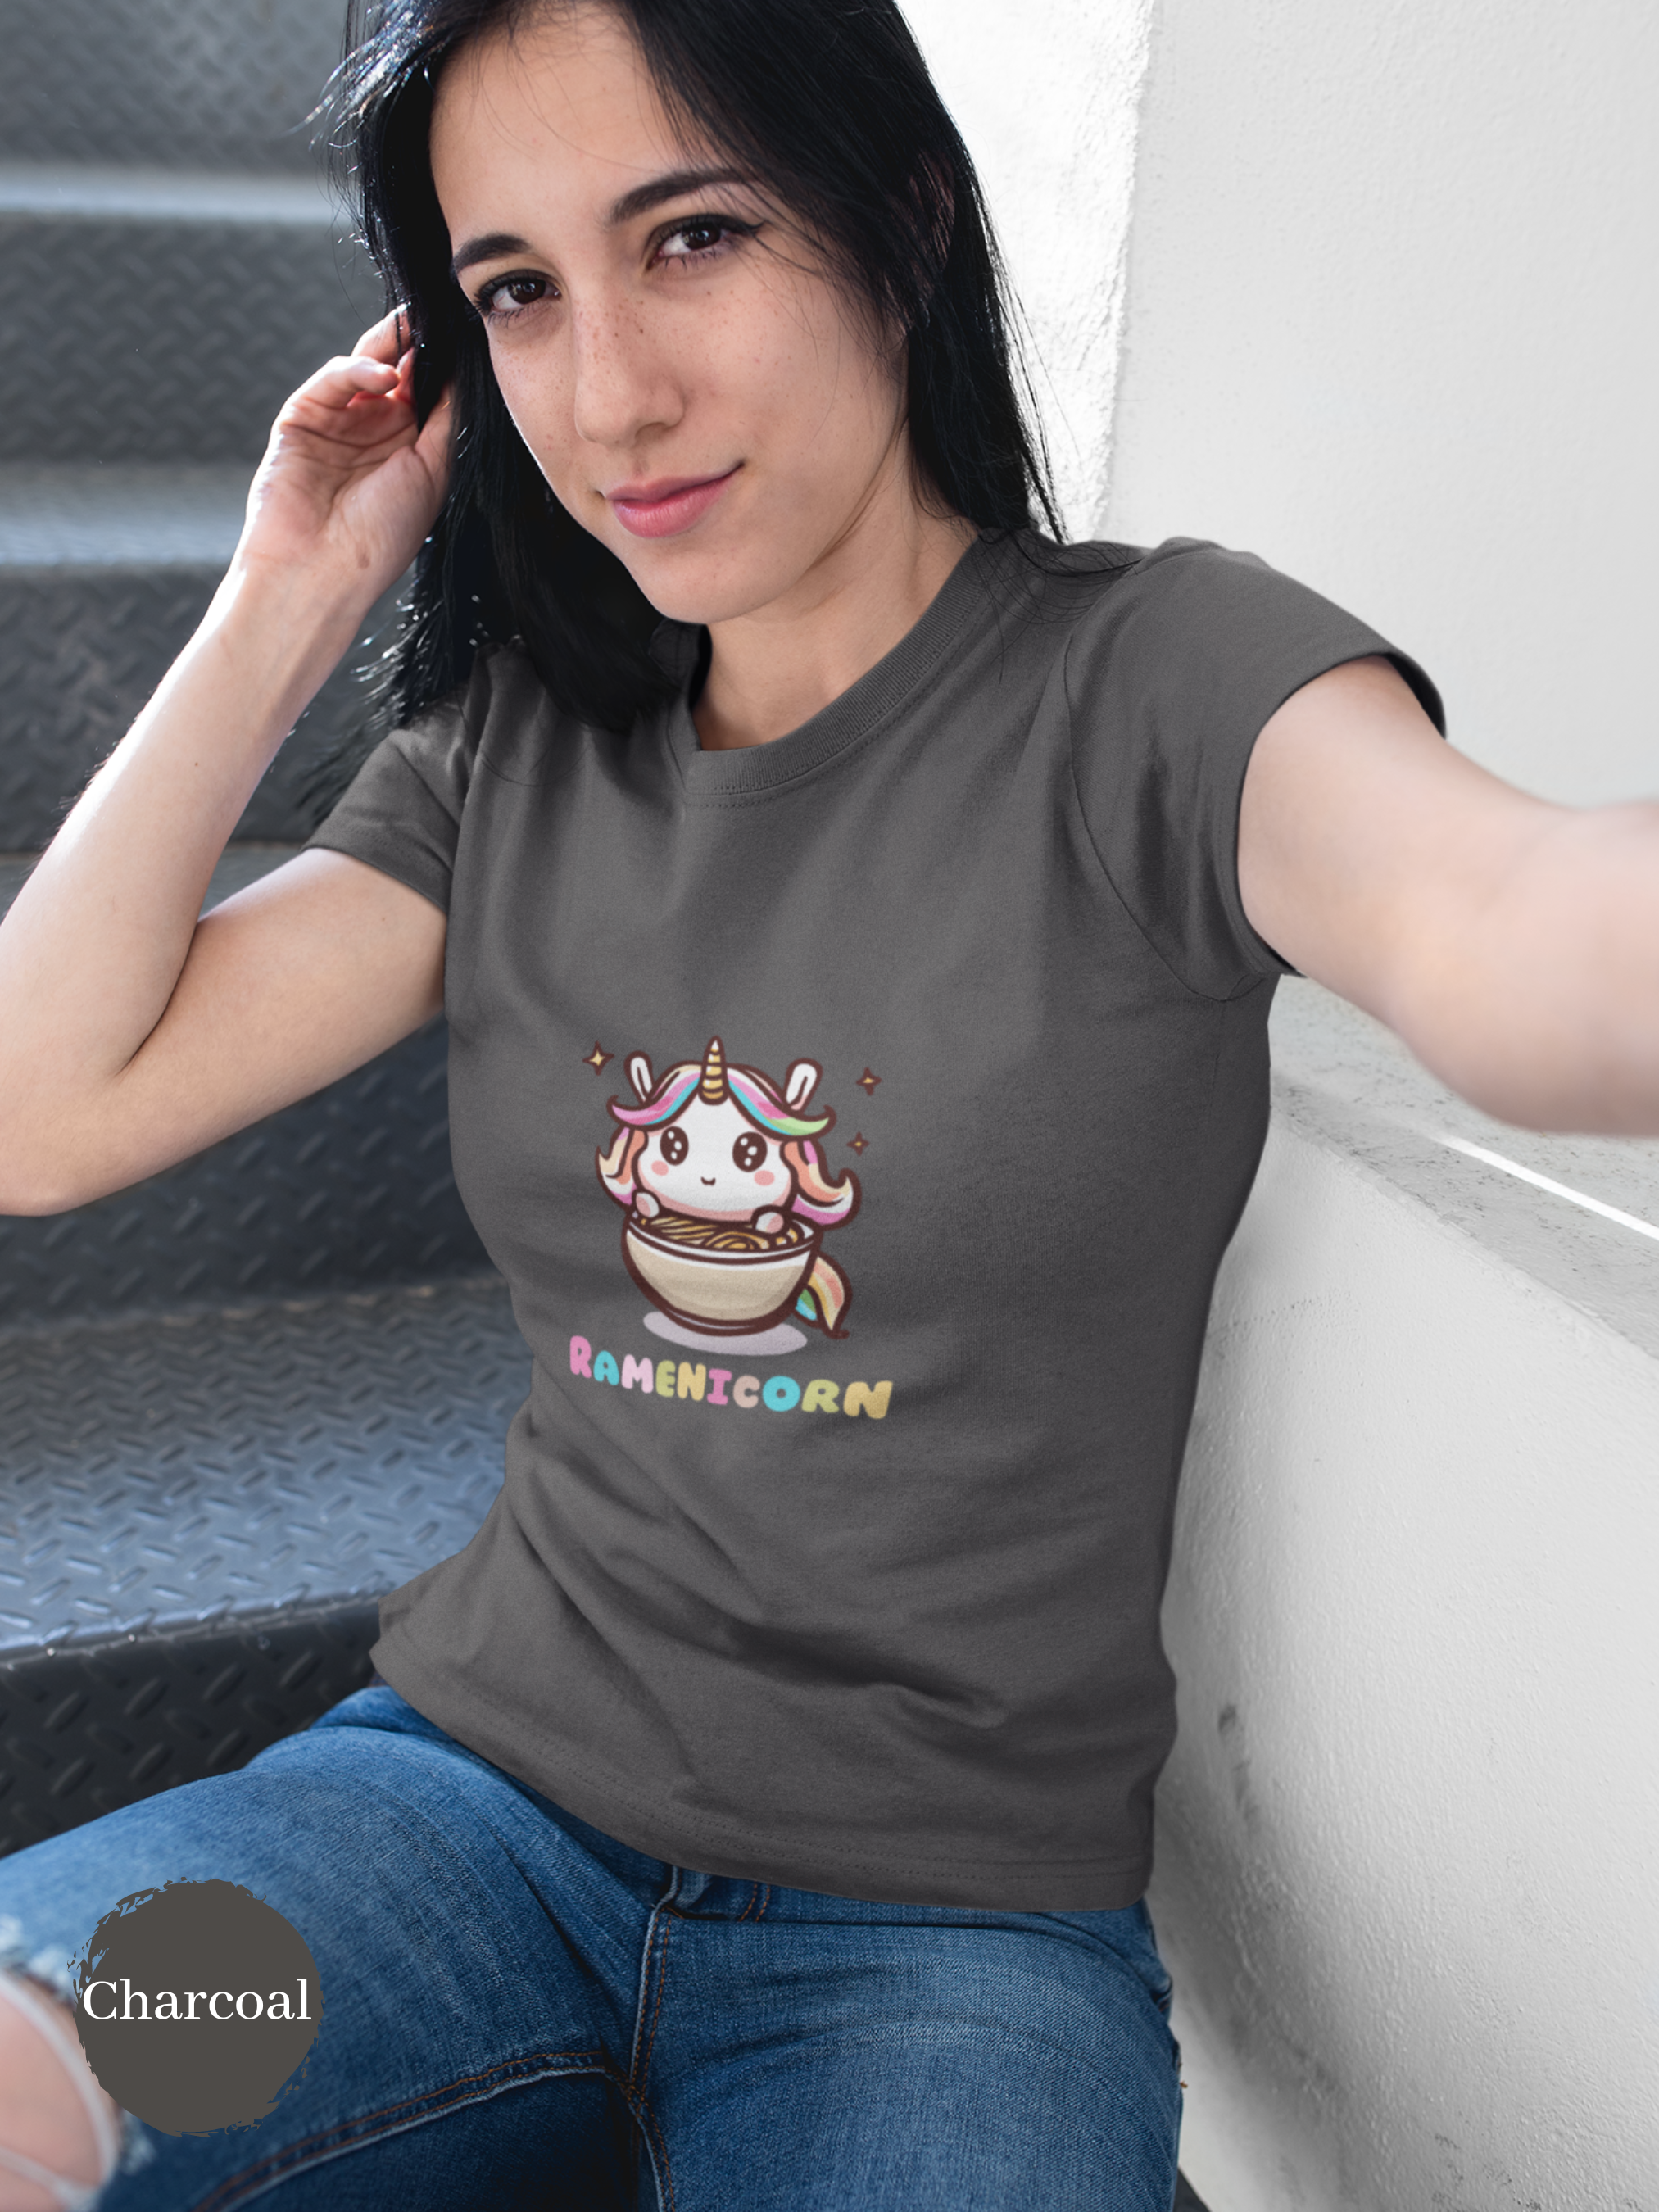 Ramen T-shirt: Japanese Foodie Shirt with Unicorn Art - Perfect Gift for Ramen Lovers